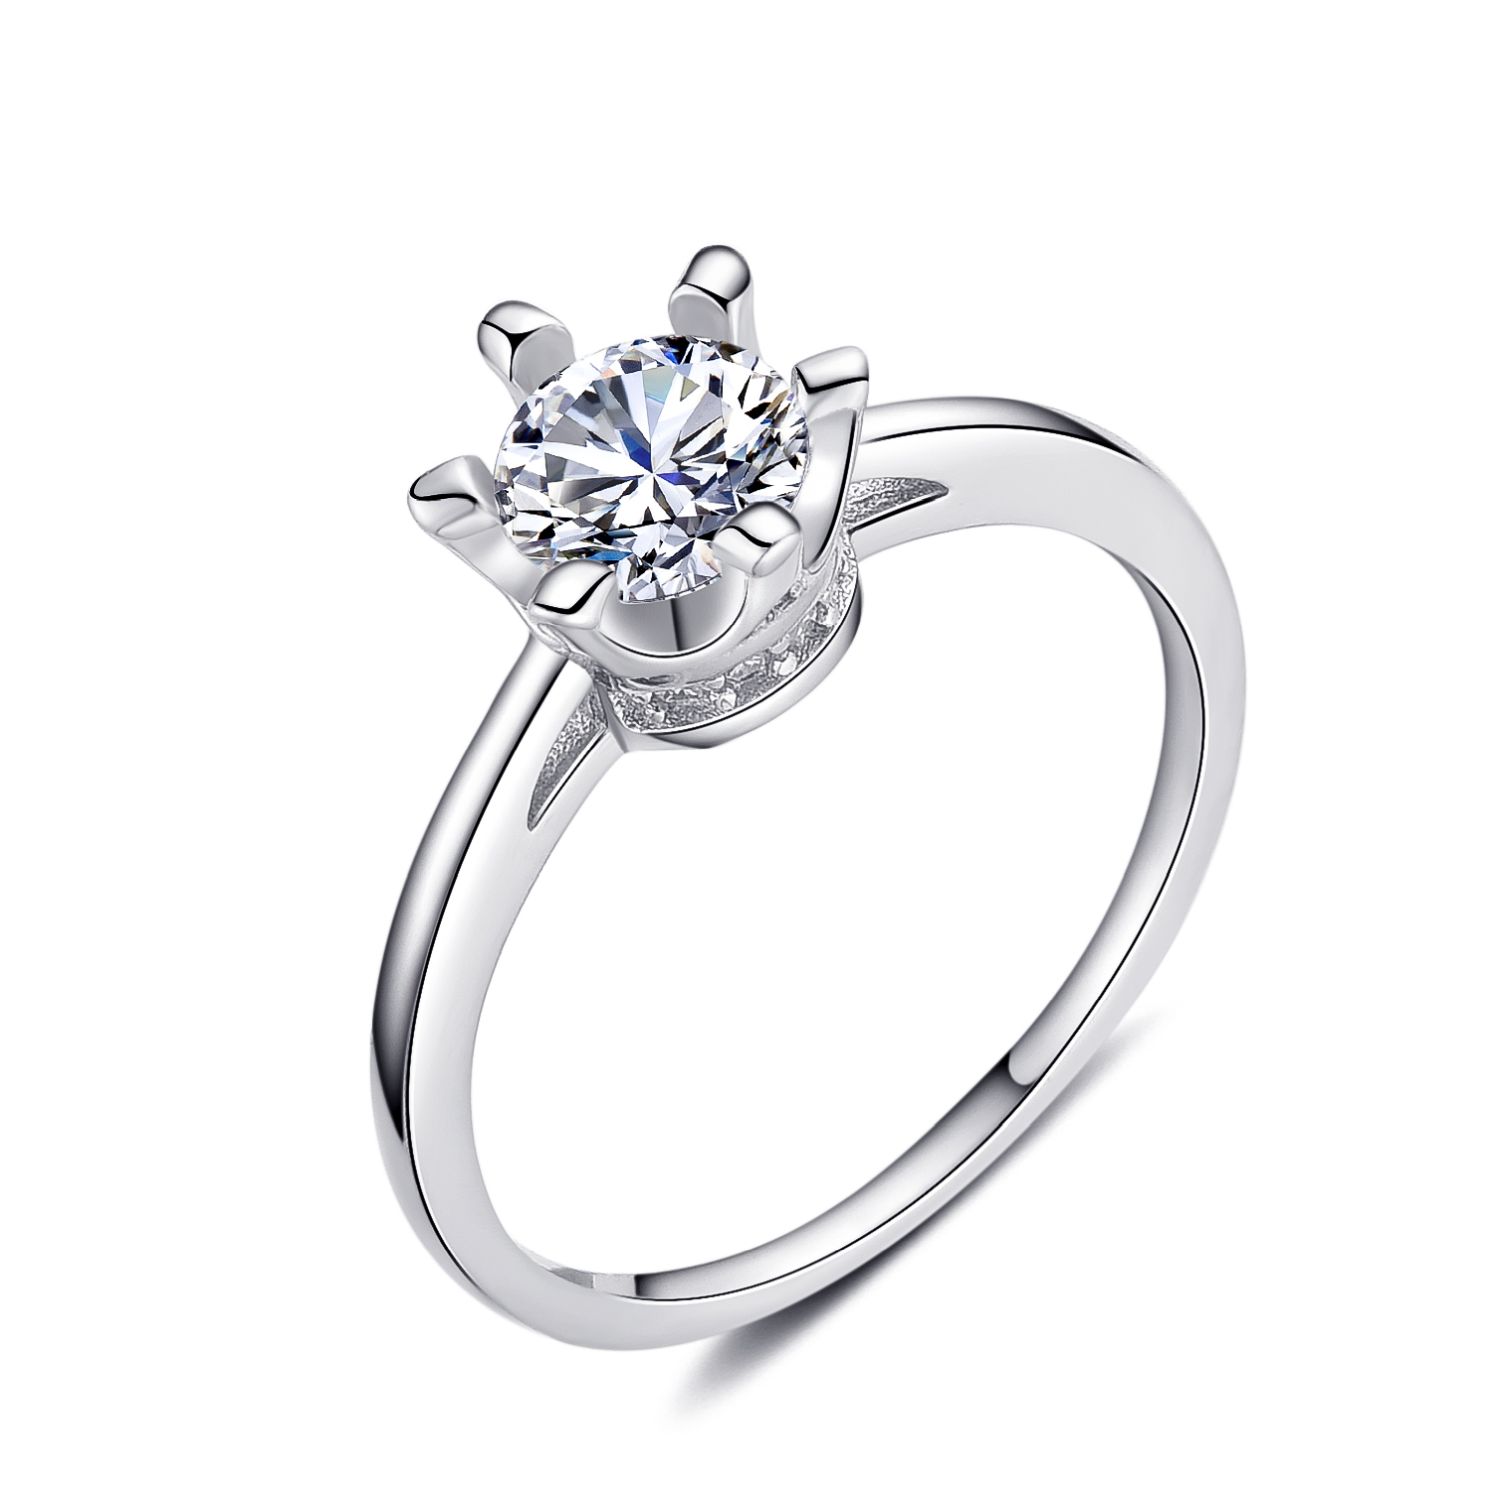 MOISS Moiss stříbrný prsten KORUNKA R0000546 Velikost 49 mm R0000546